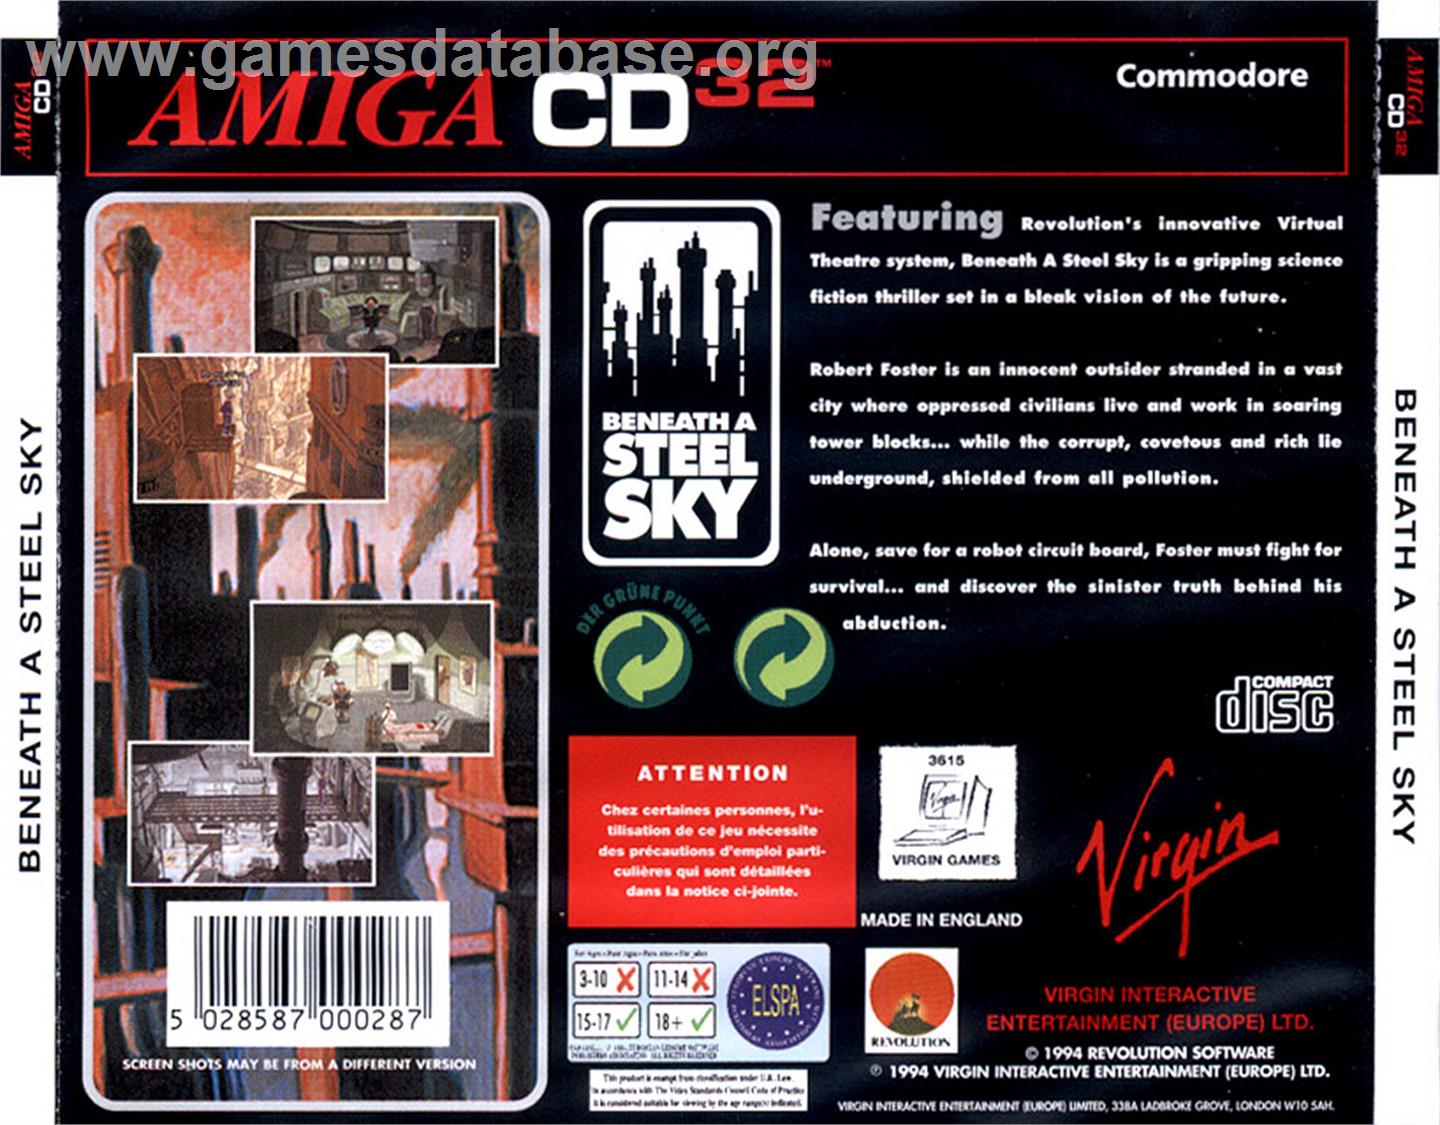 Beneath a Steel Sky - Commodore Amiga CD32 - Artwork - Box Back